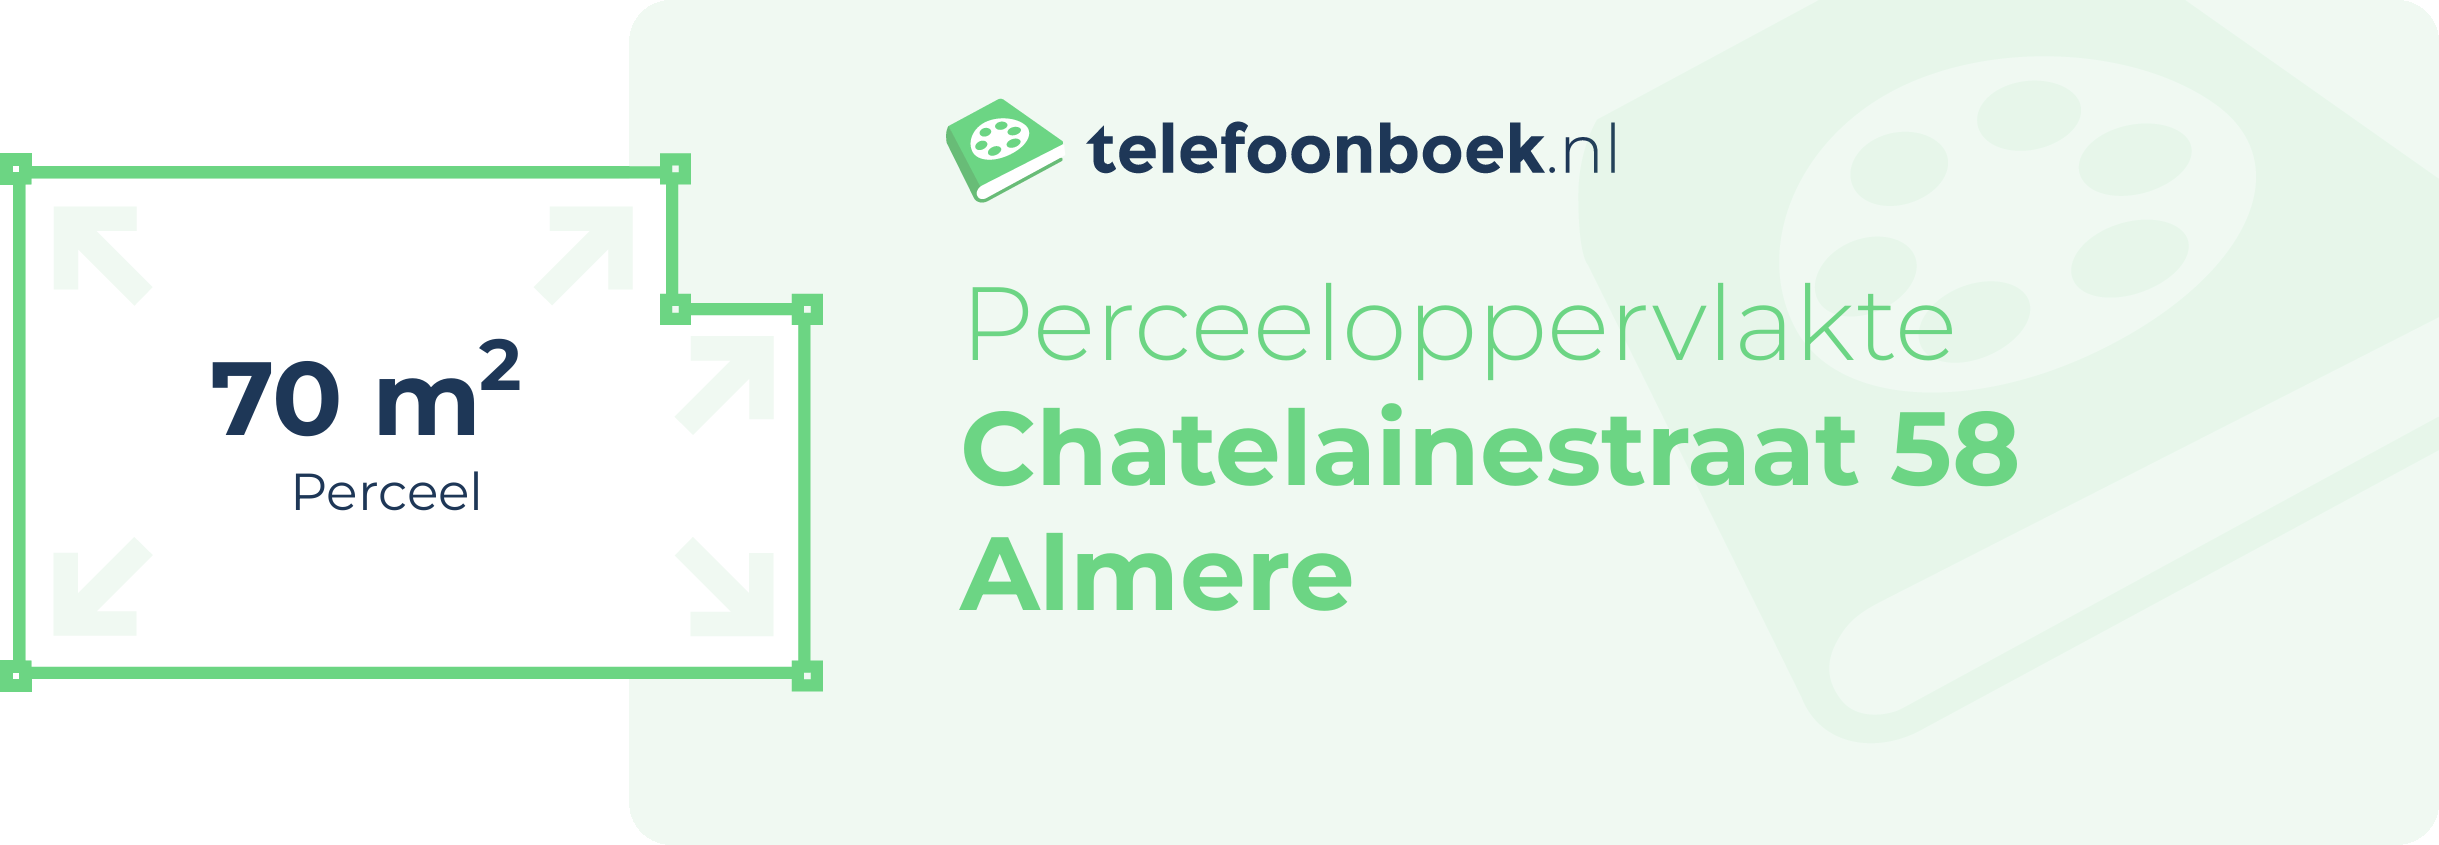 Perceeloppervlakte Chatelainestraat 58 Almere